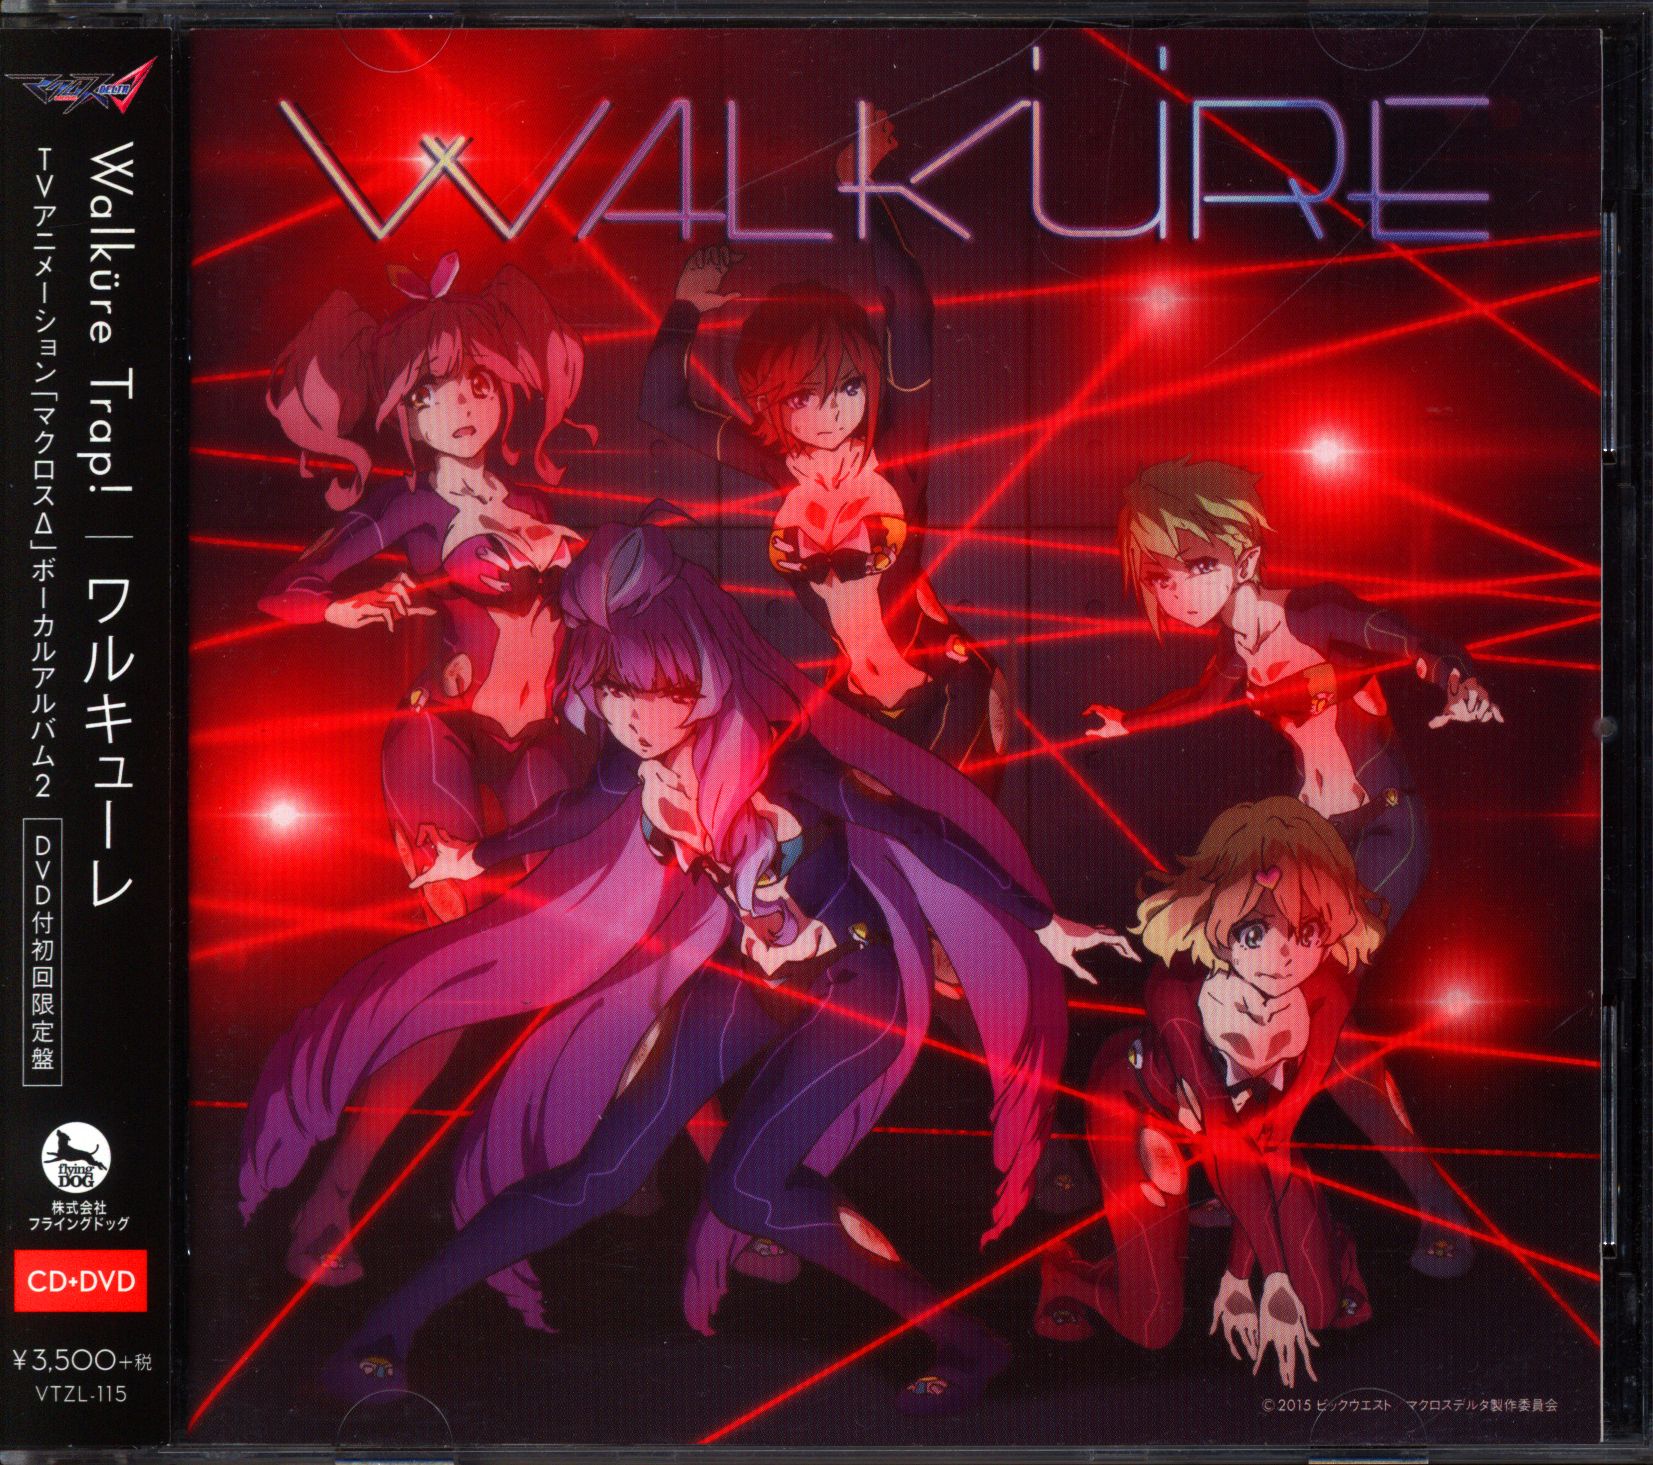 Macross Δ (Delta) Valkyrie / 2nd album Trap Walkure! Limited